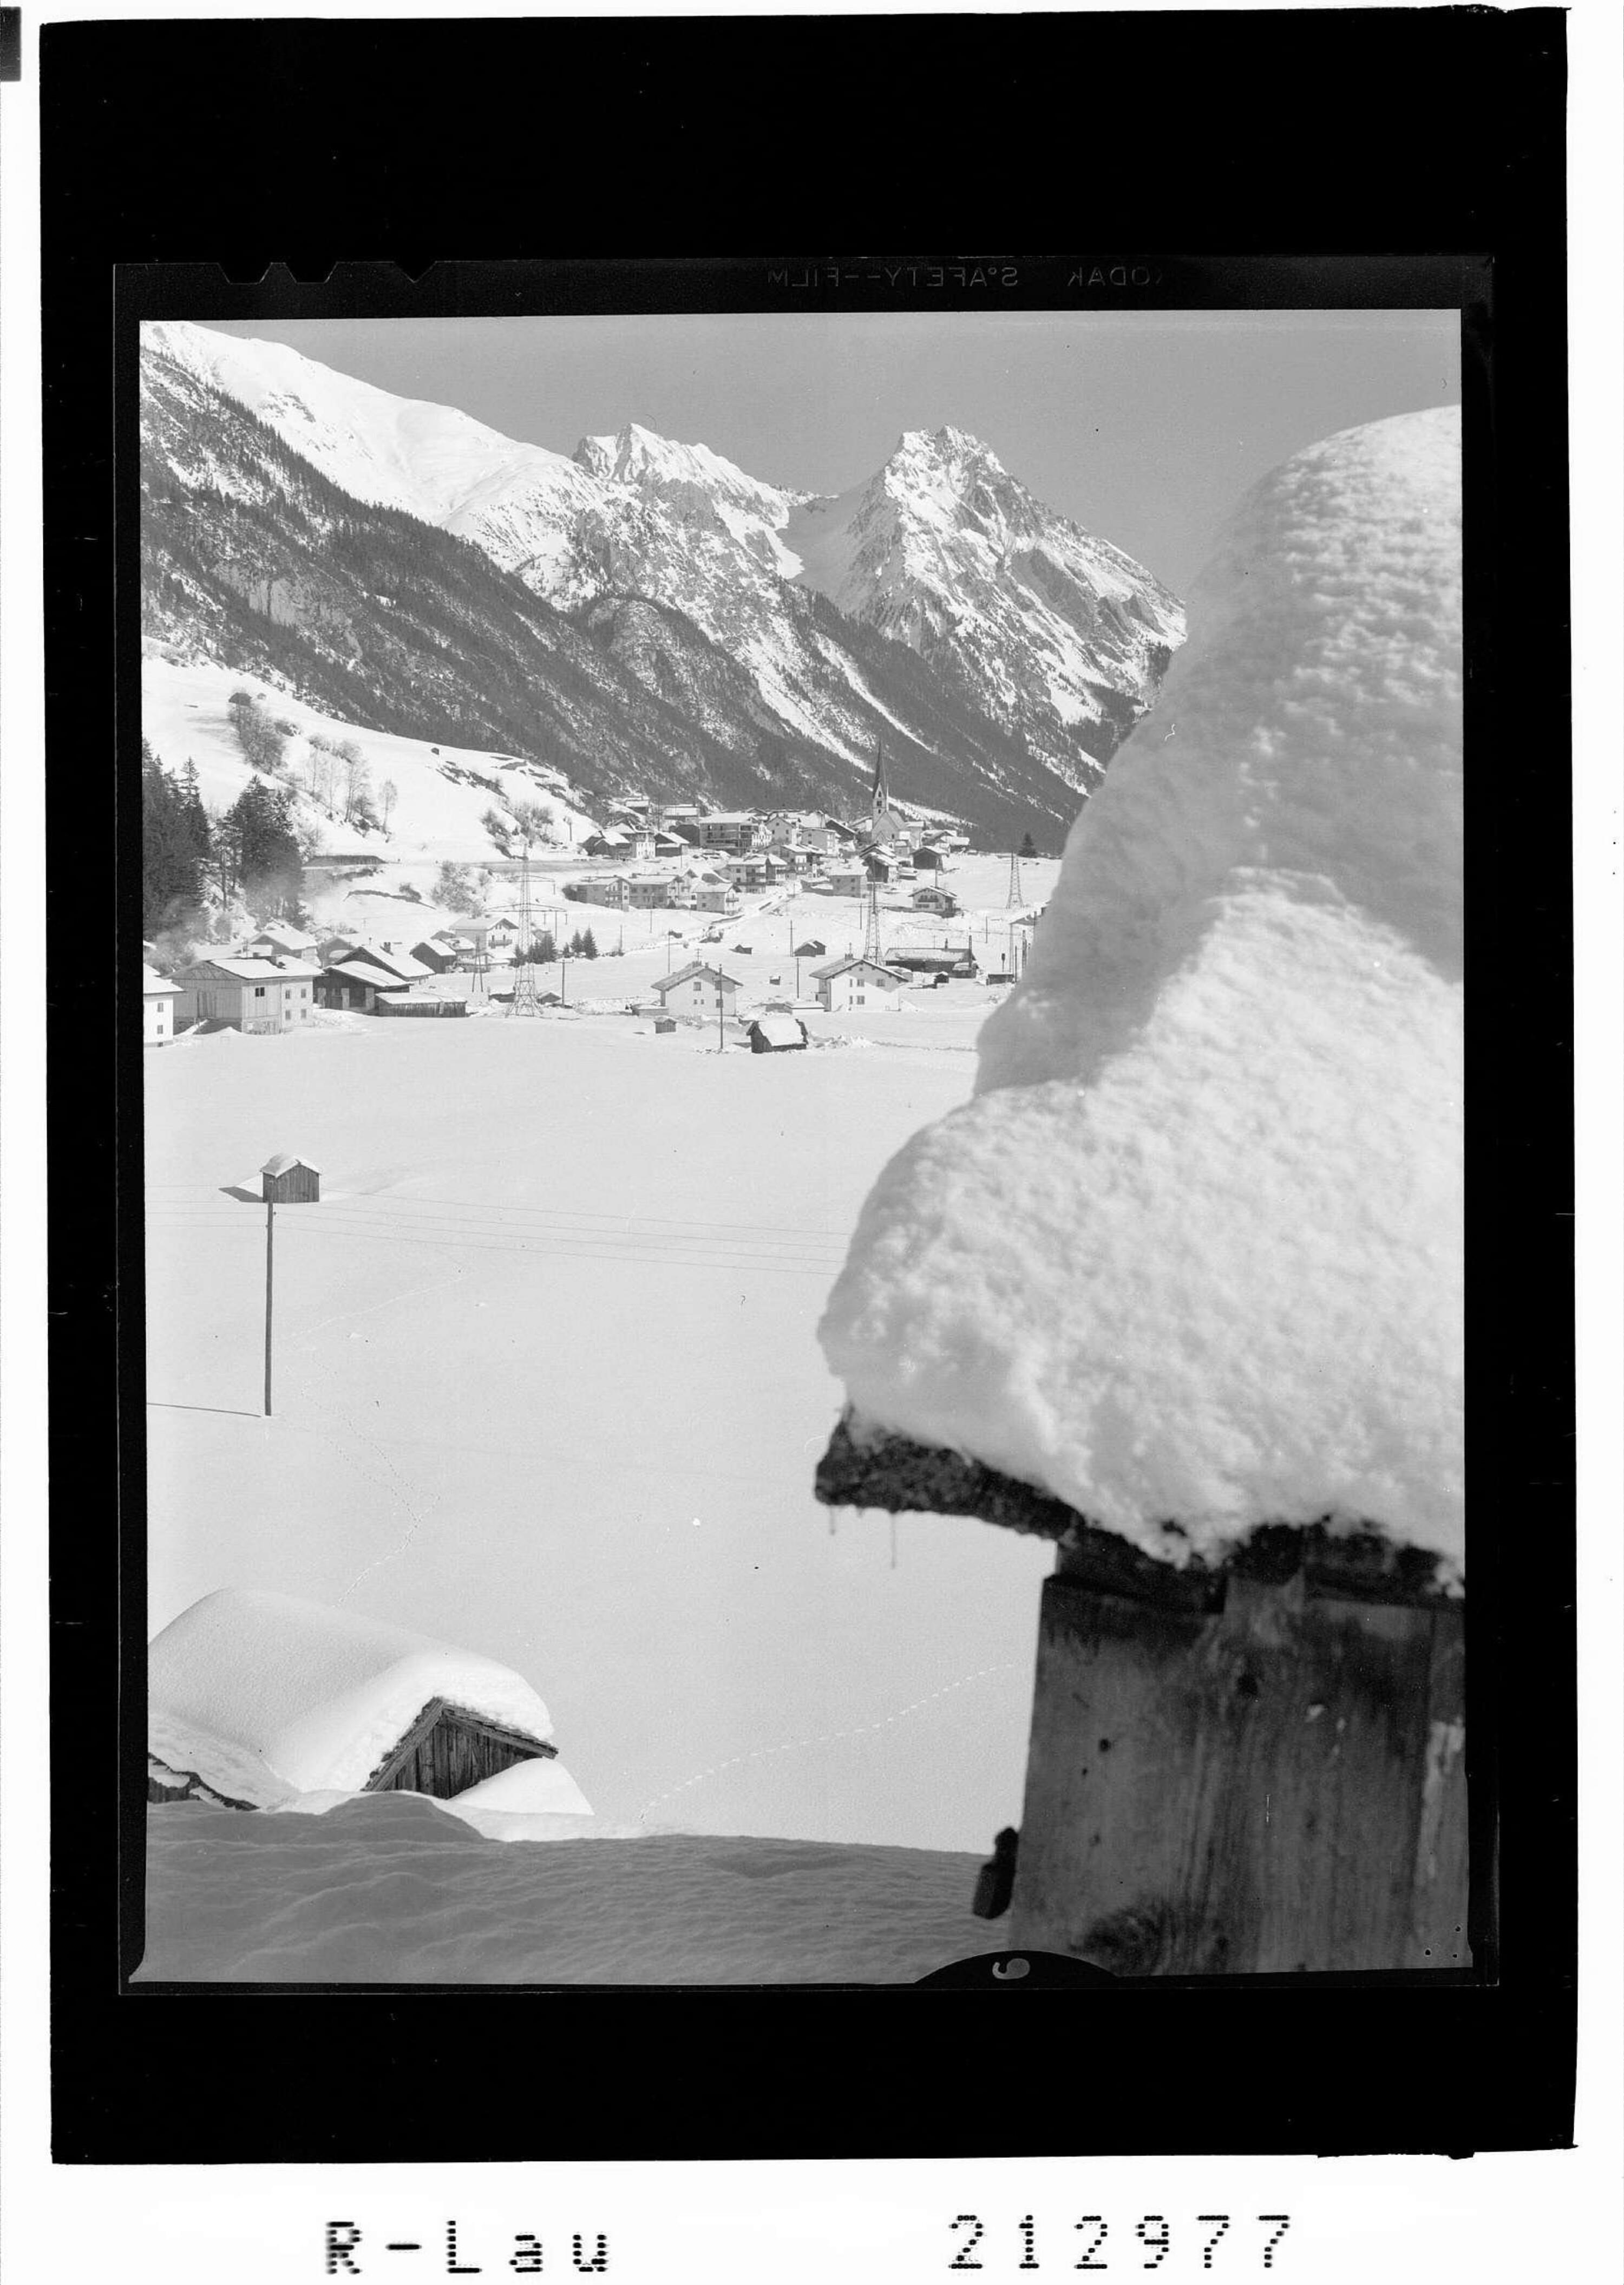 Pettneu am Arlberg 1351 m gegen Parseierspitze 3038 m und Eisenspitze 2845 m></div>


    <hr>
    <div class=